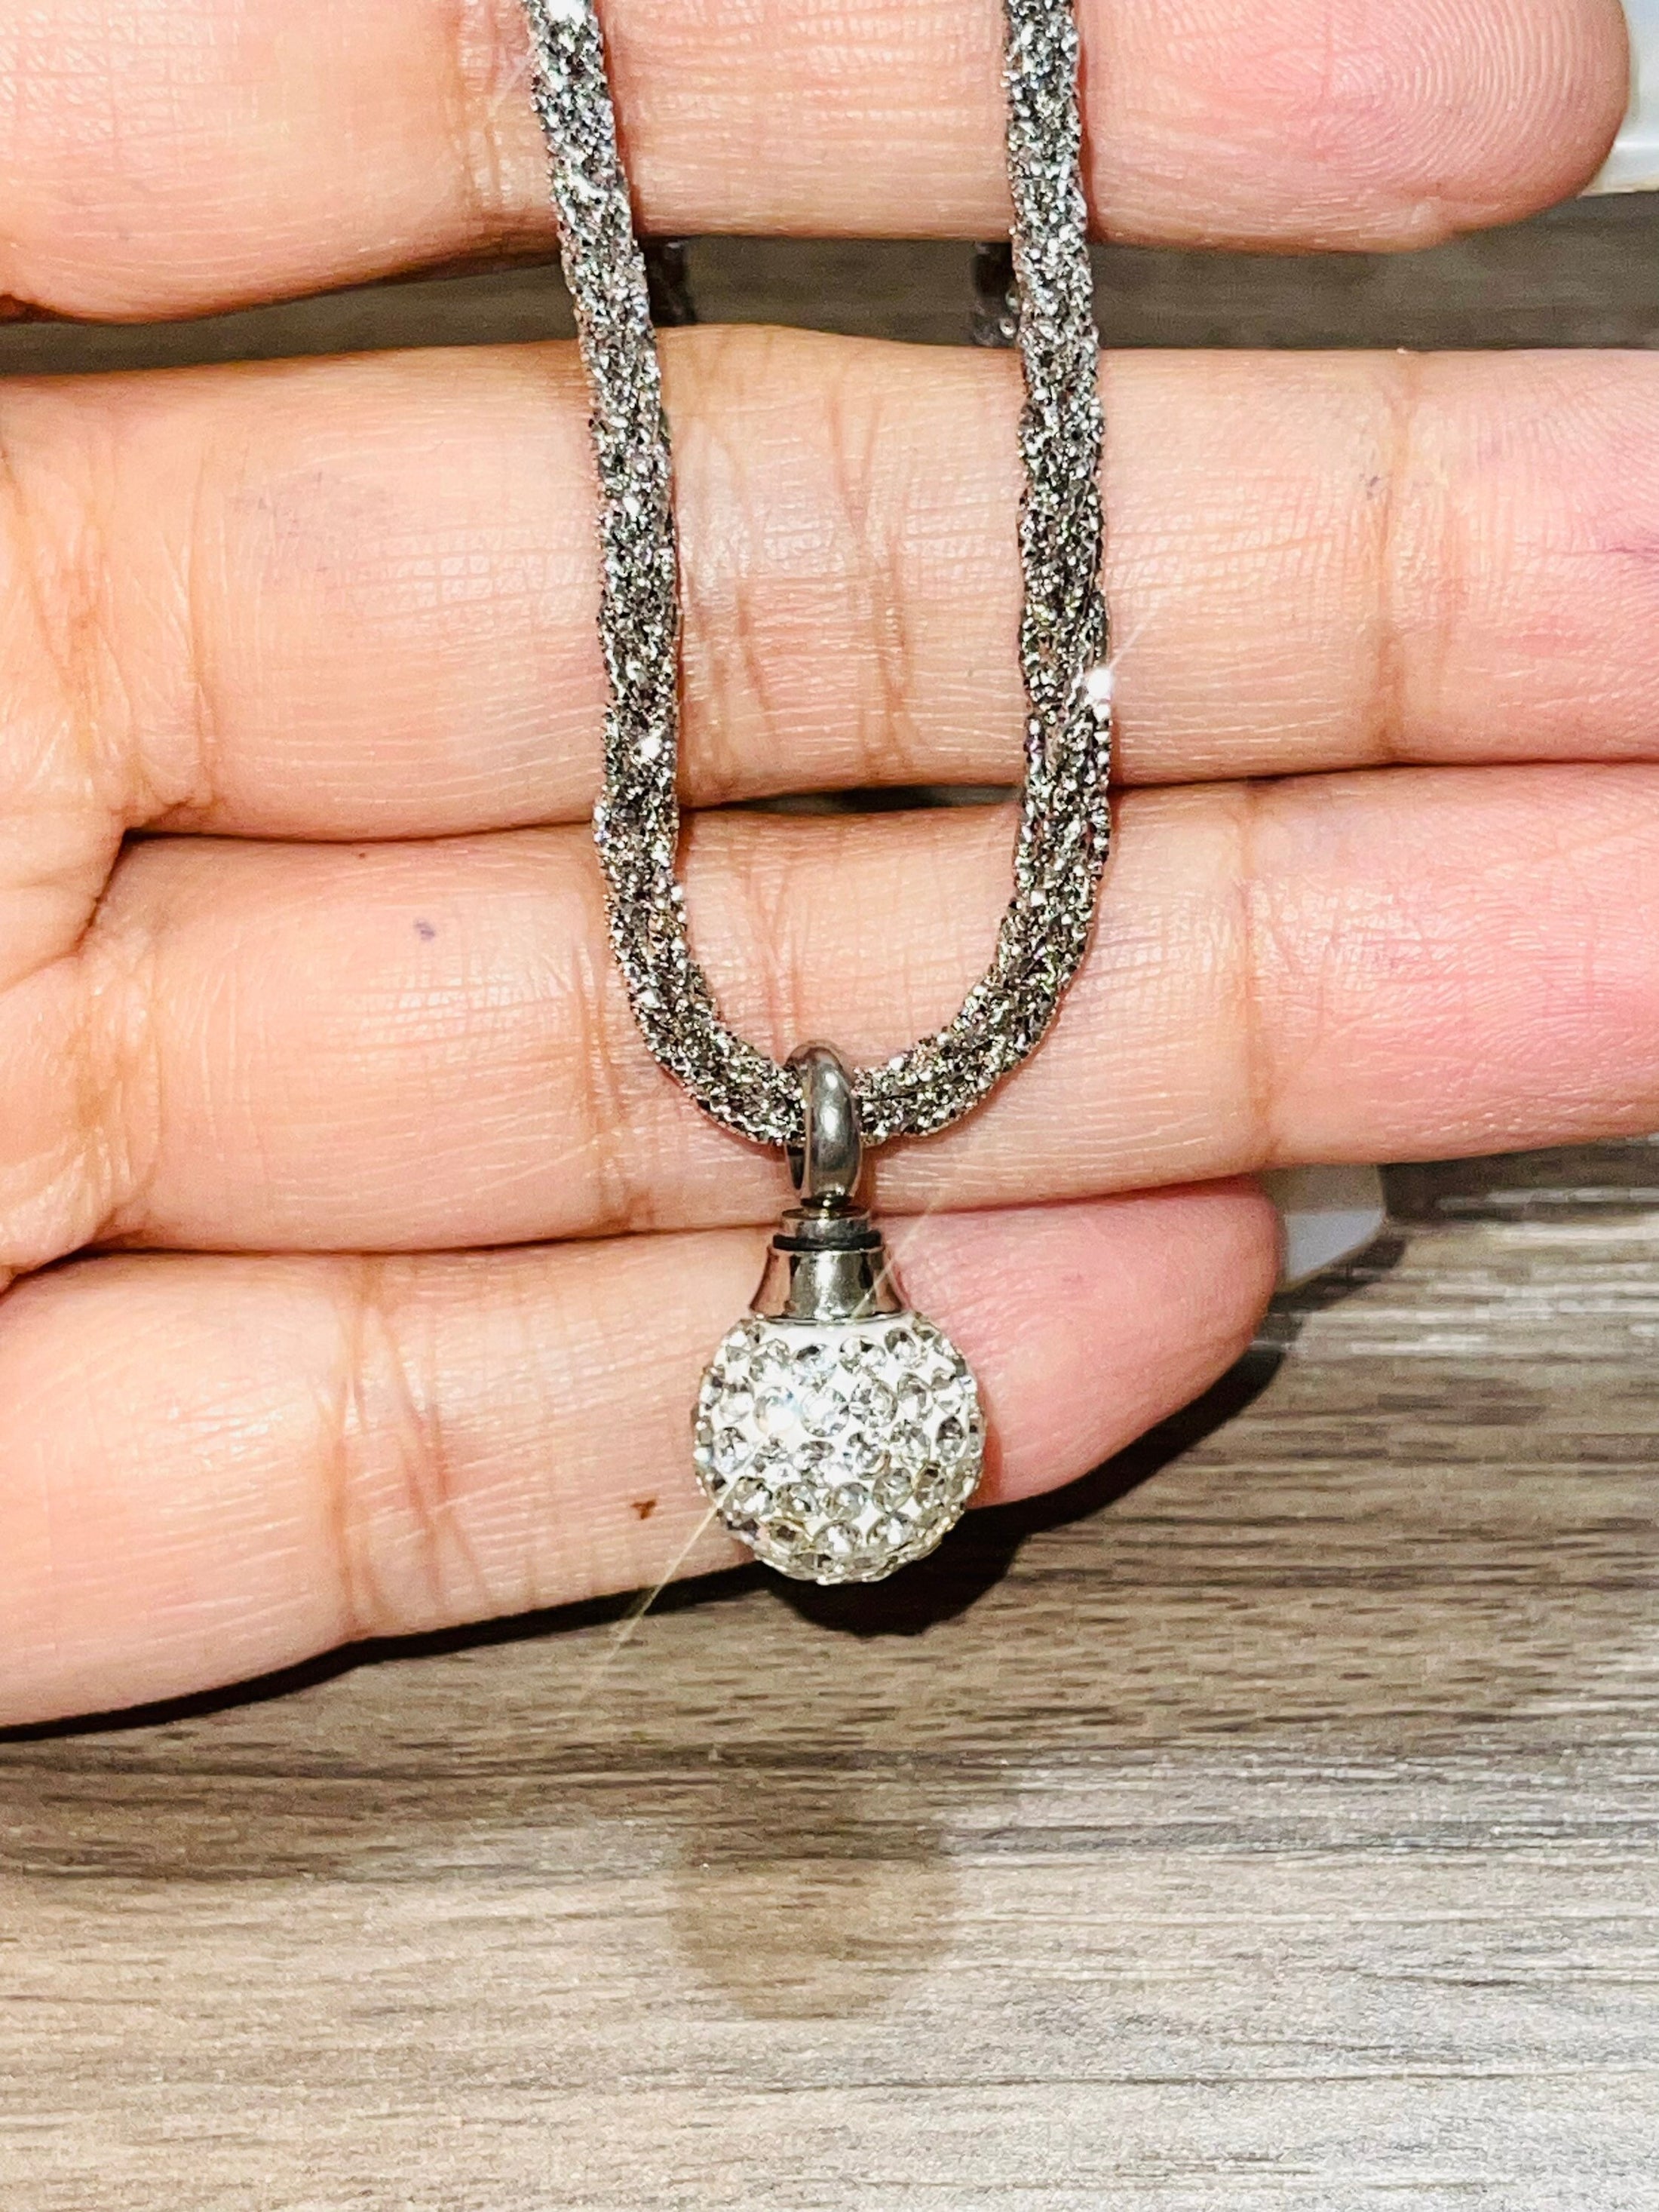 Urn necklace for ashes, cremation urn jewelry, keepsake pendant, Real Diamond Bangle, Designer sparkling Turkish chain, urn necklace/ bangle